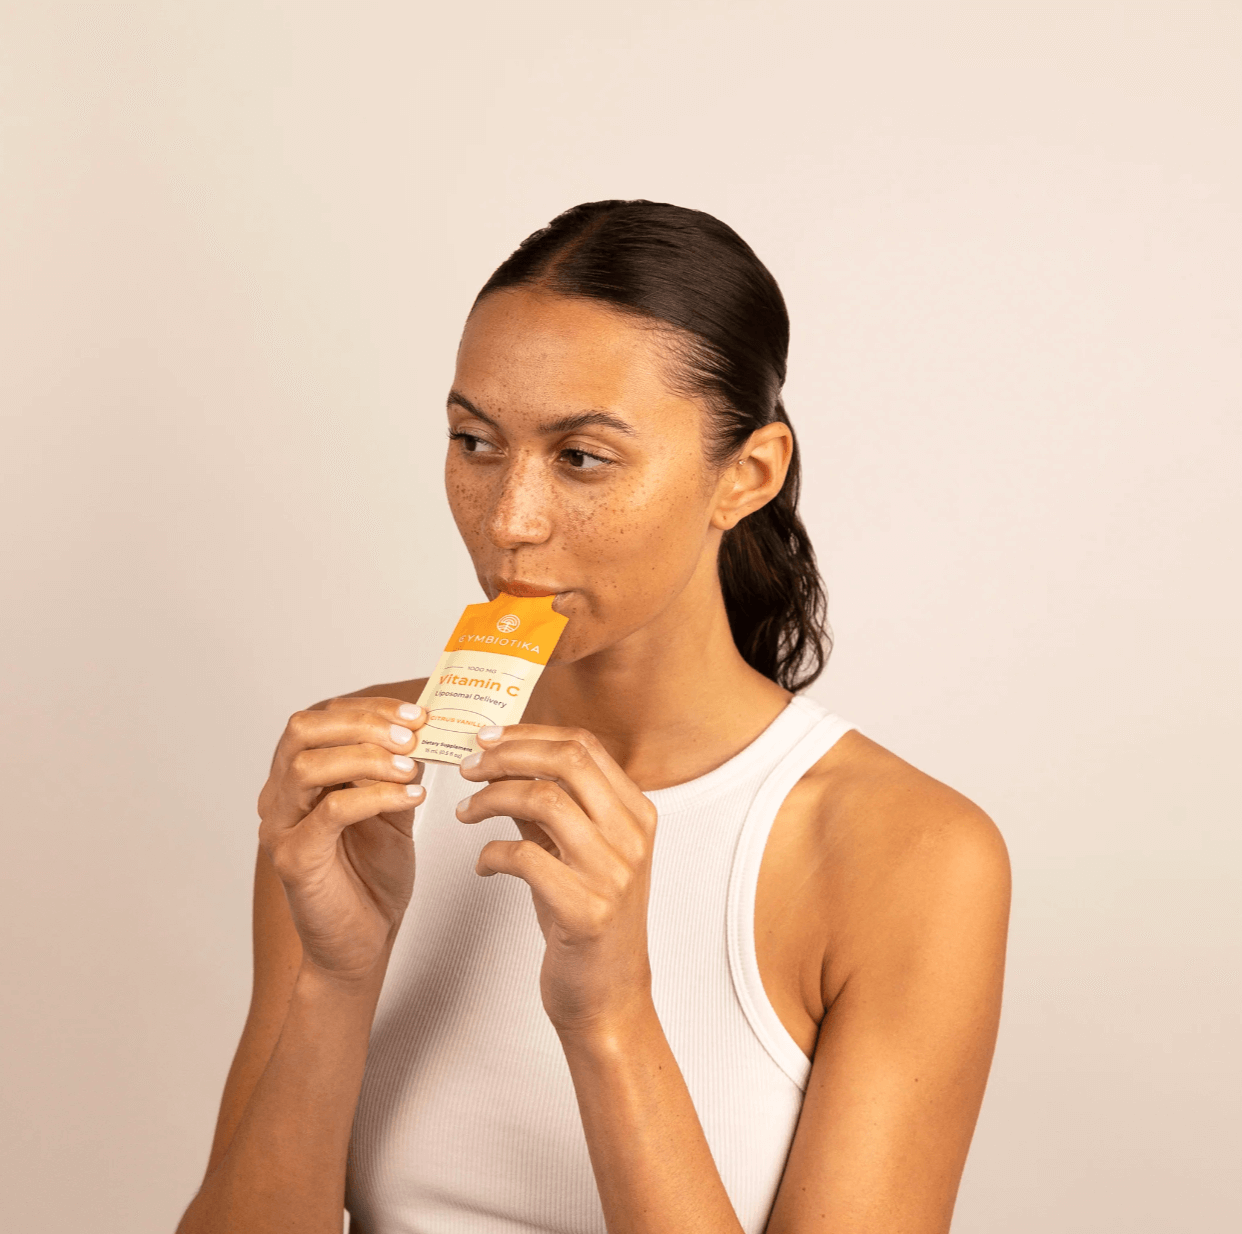 Image of woman eating cymbiotika liposomal vitamin C packets